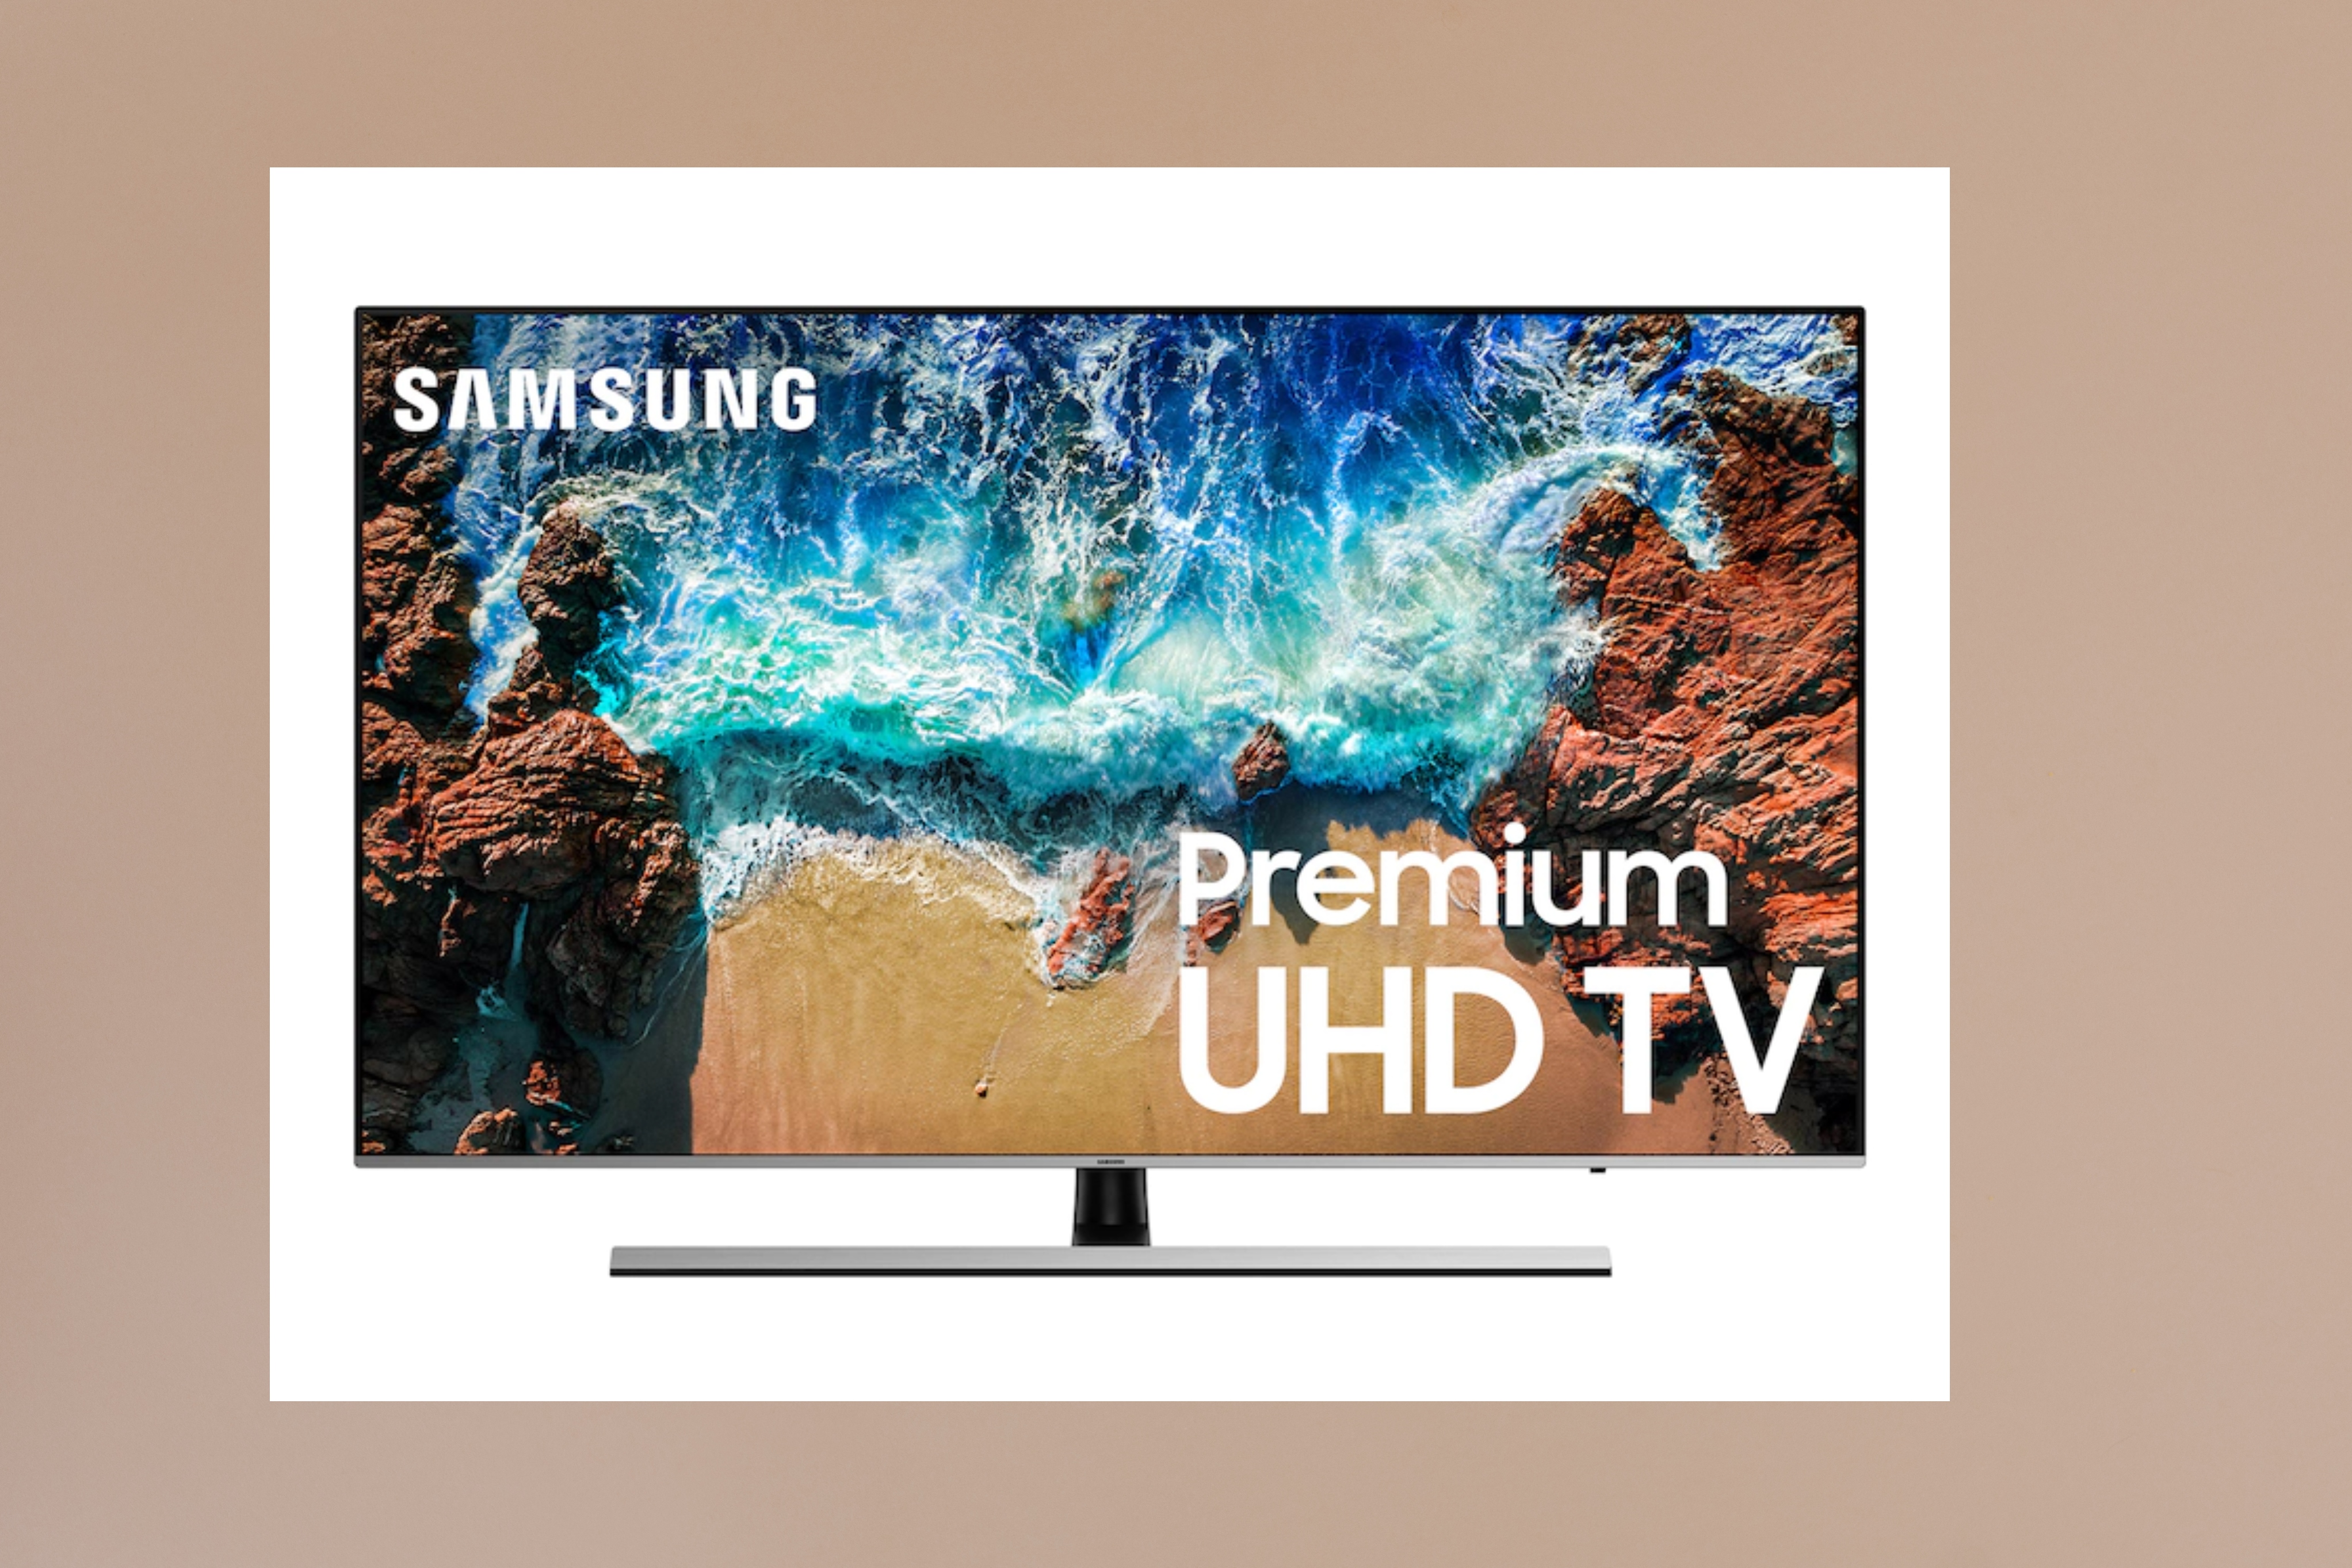 Samsung UHD Premium TV on a white and orange background